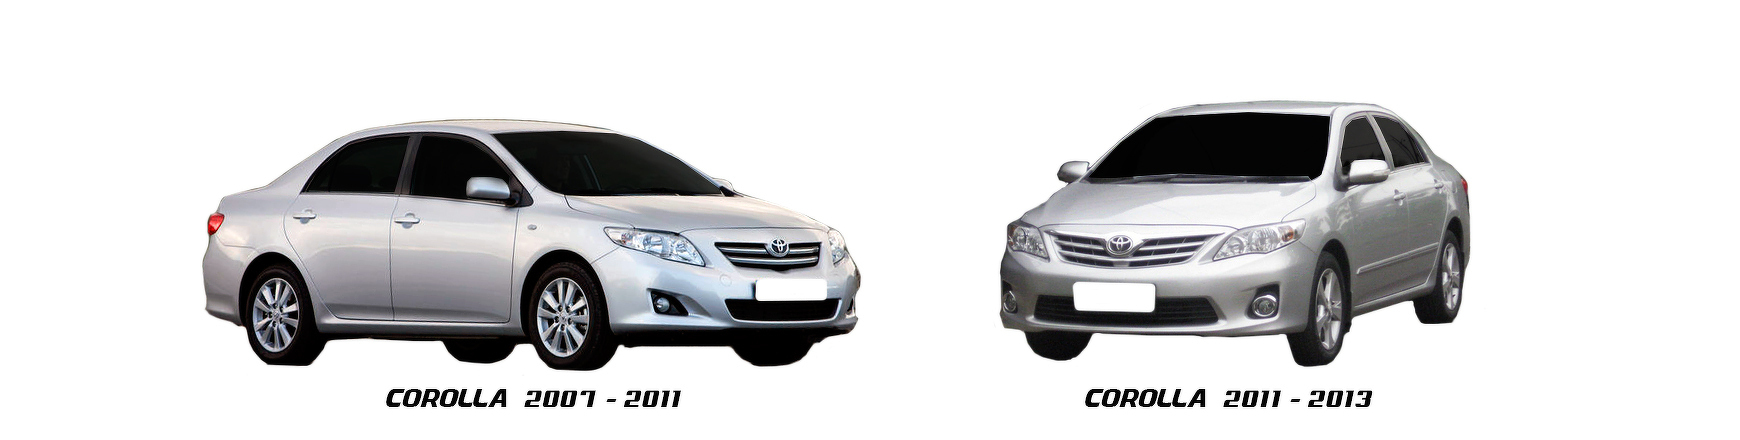 Piezas y Recambios de Toyota Corolla (E14|E15) de 2007 a 2013 | Veramauto.es